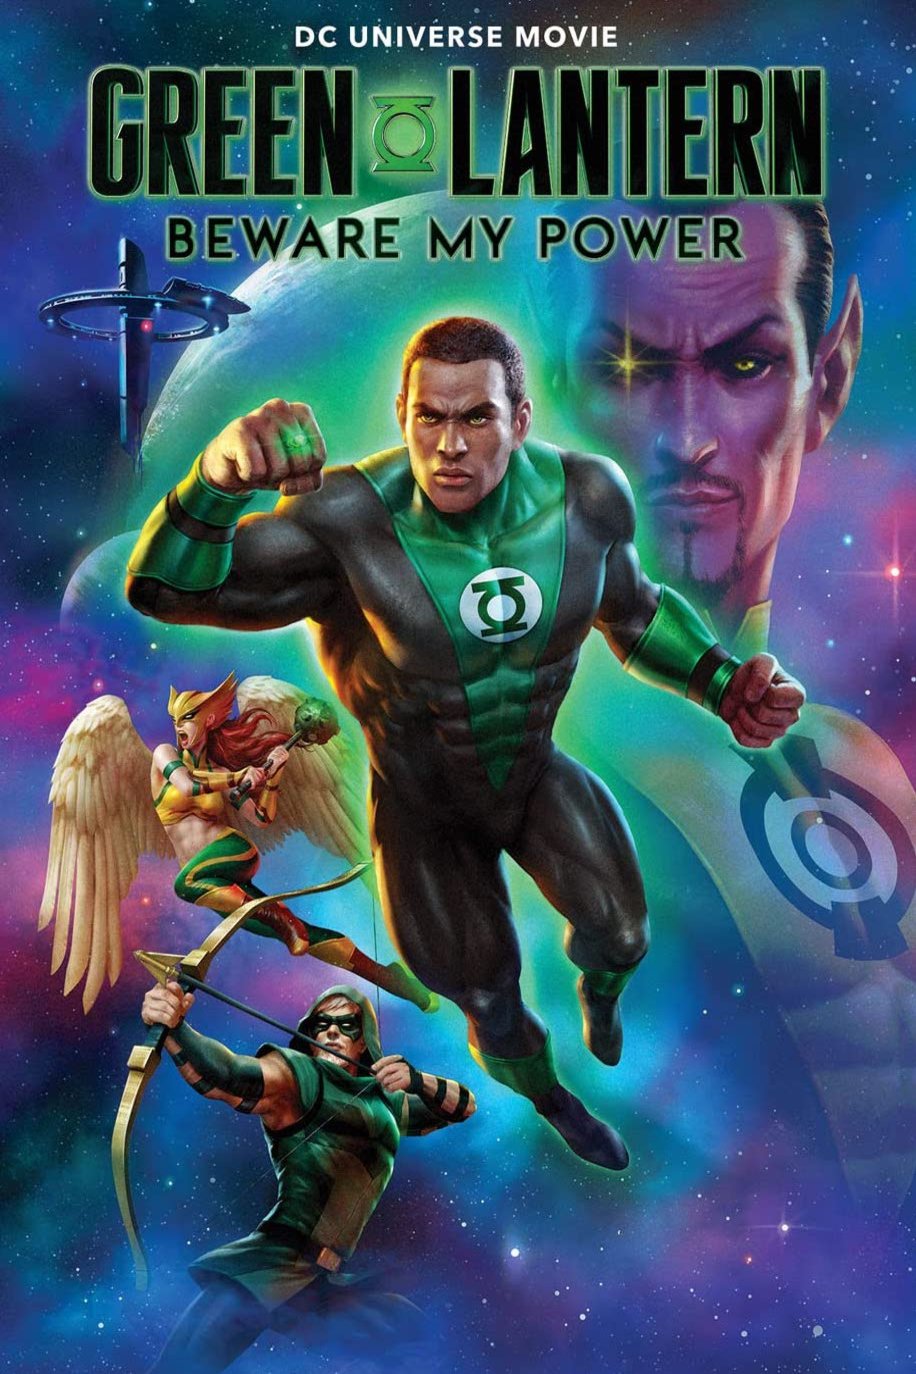 Poster of the movie Green Lantern: Beware My Power